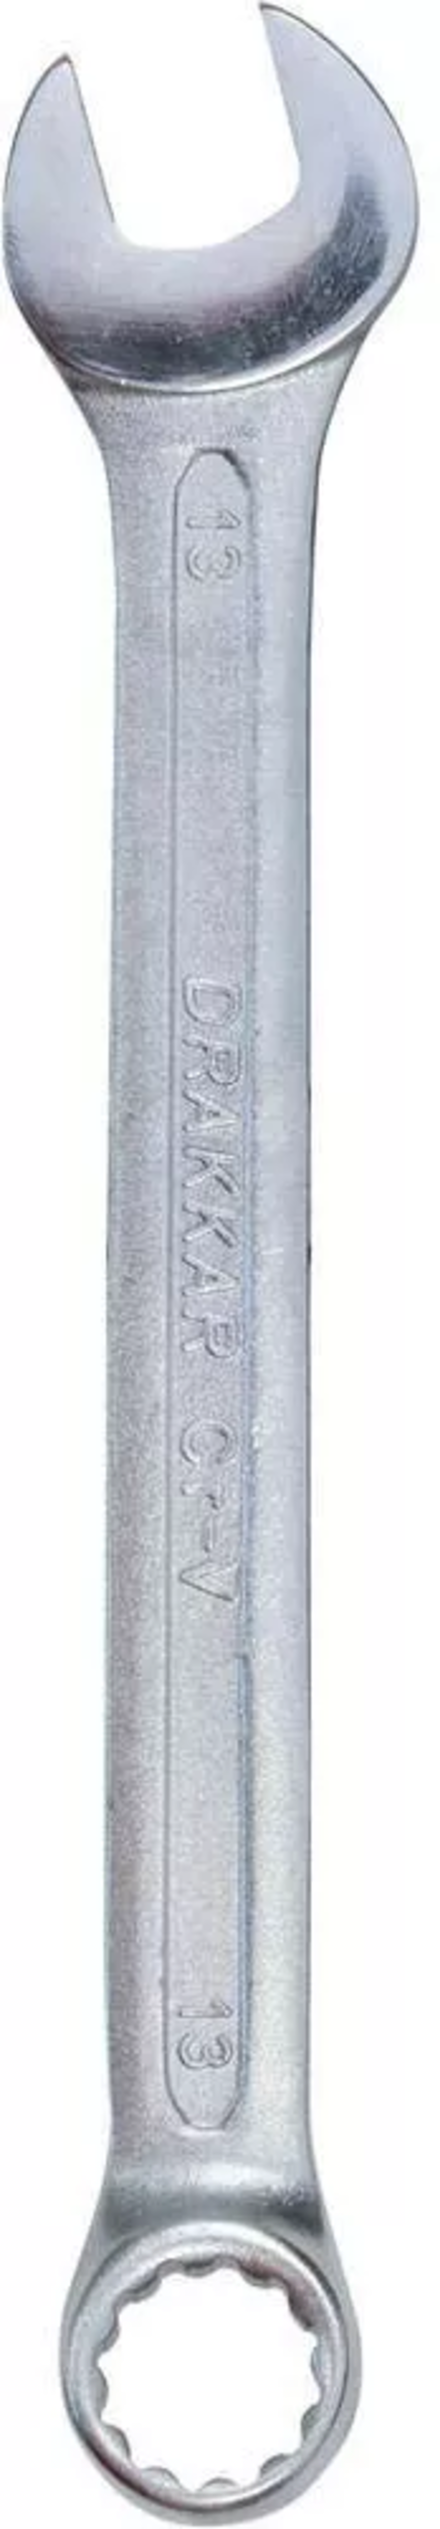 Cle mixte tete polie 13mm DRAKKAR TOOLS - 13763